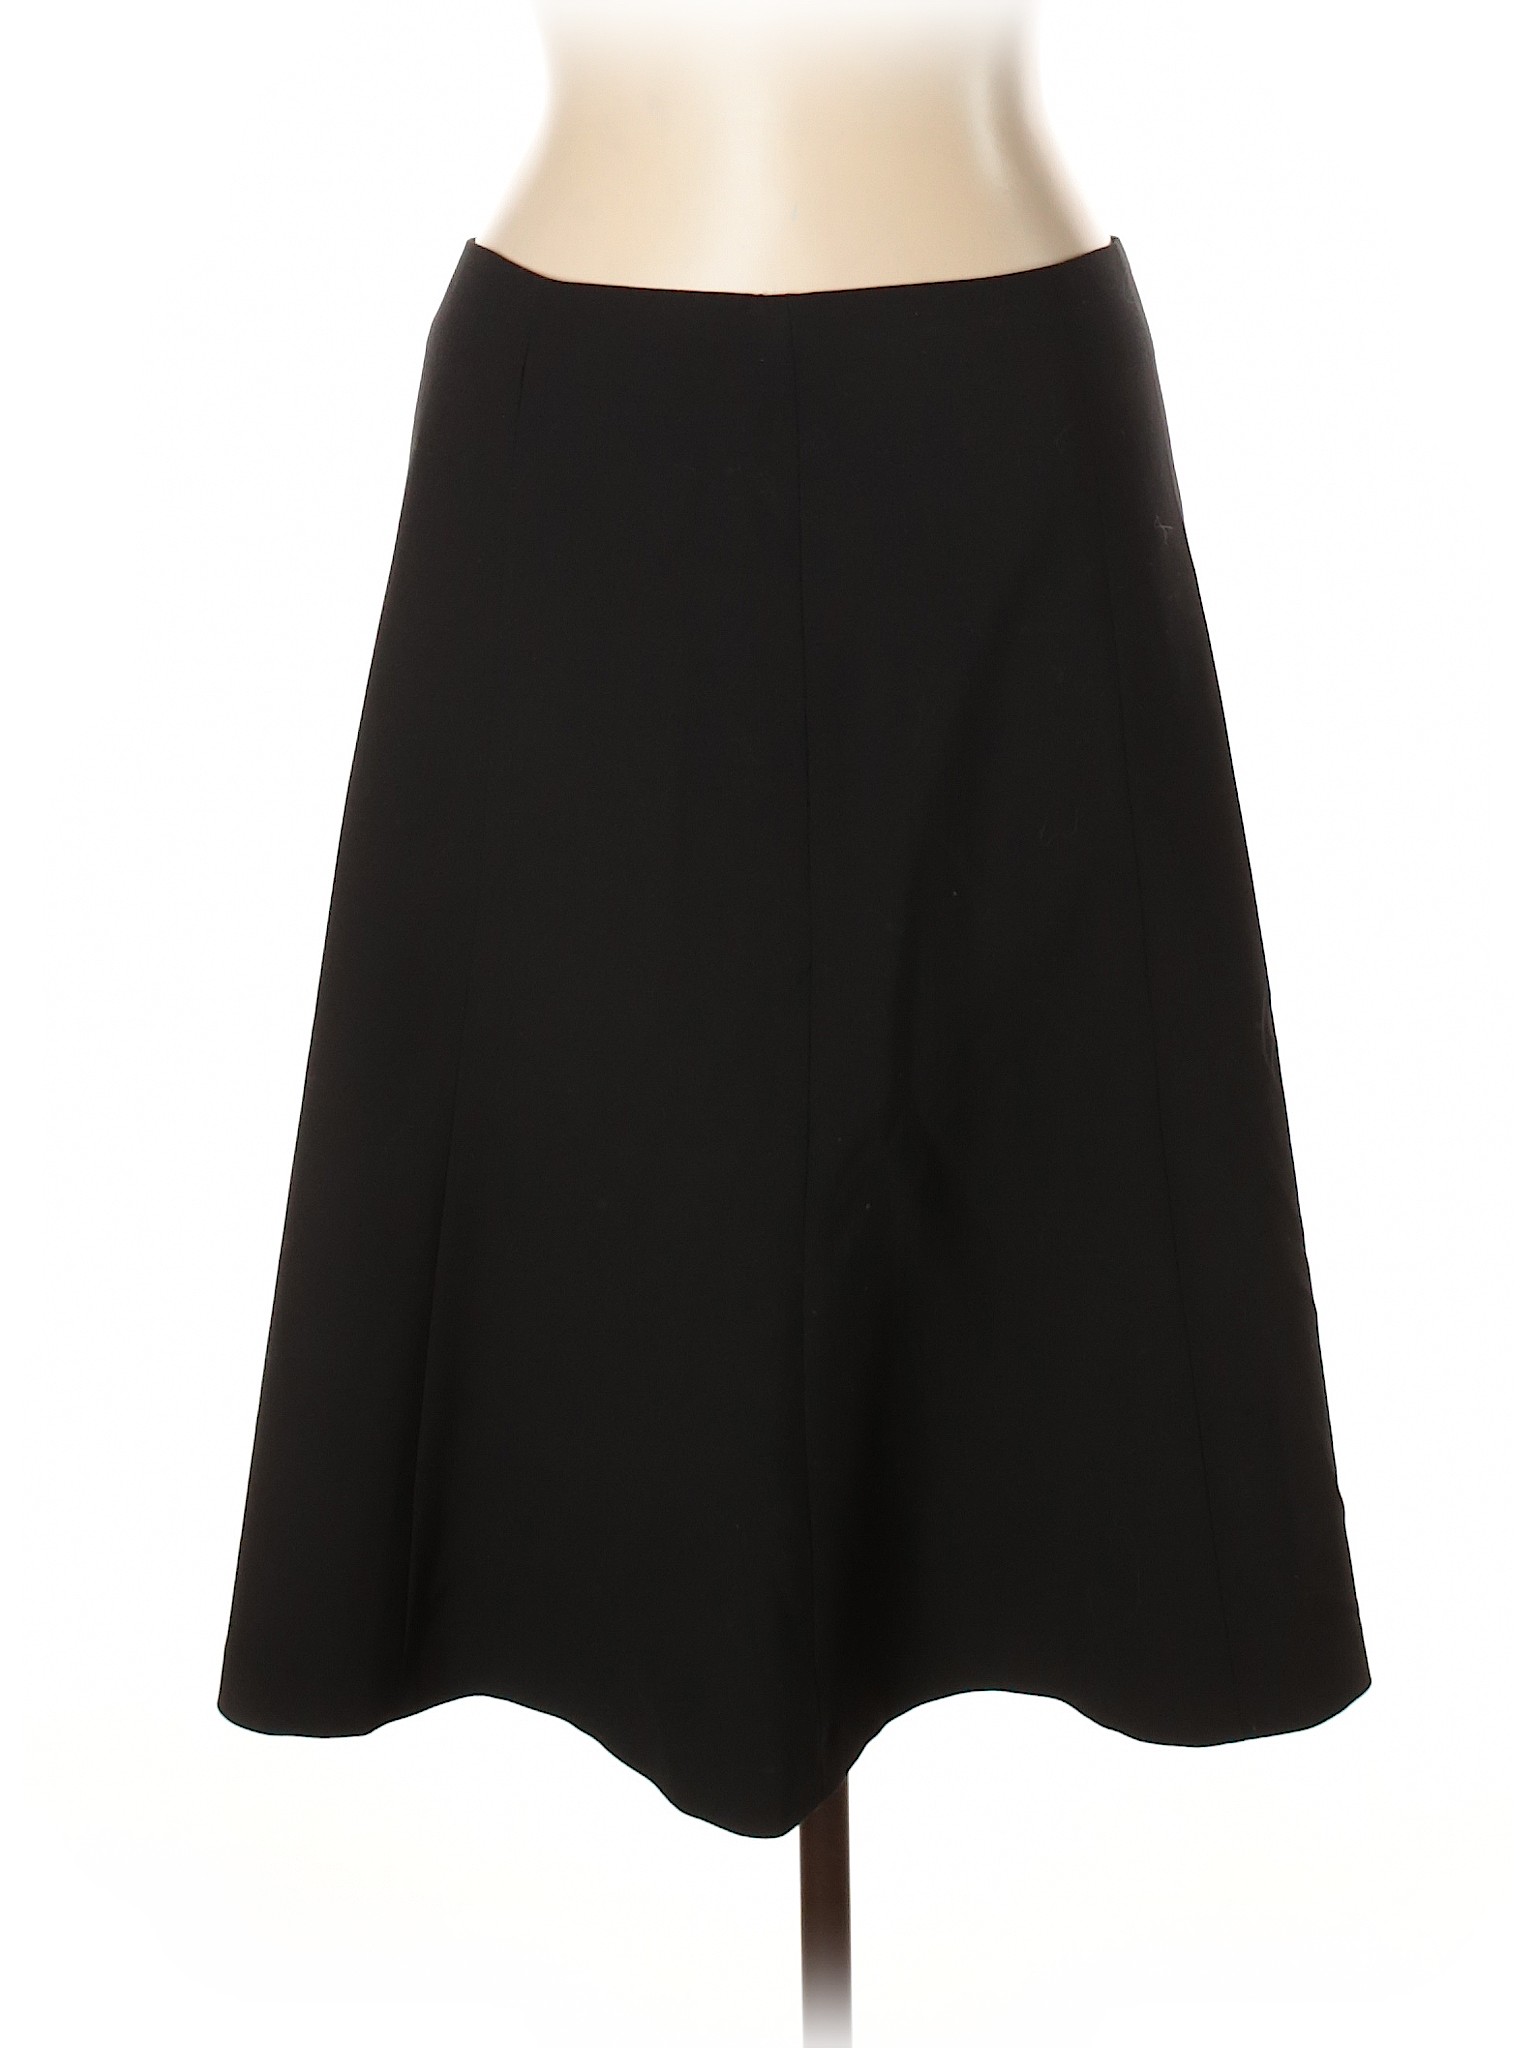 Gap Outlet Women Black Wool Skirt 10 | eBay